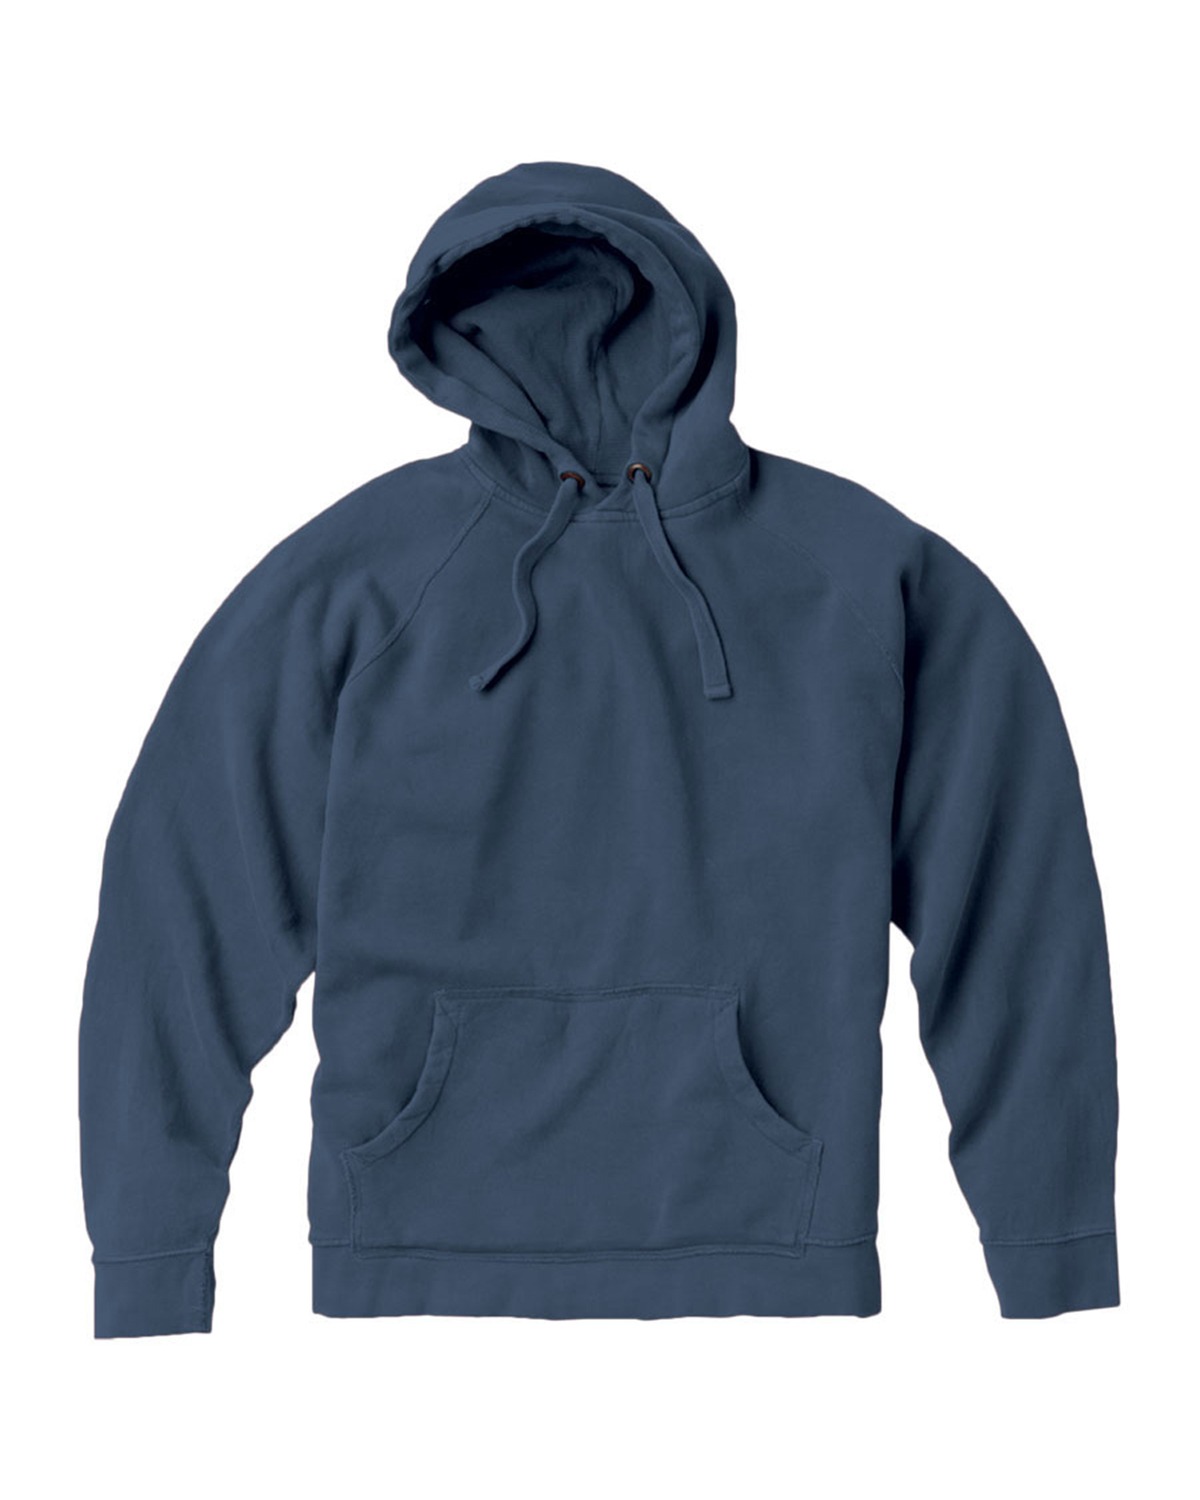 https://images.shirtspace.com/fullsize/1Sv3Xqi91a7K92st0%2F5KCA%3D%3D/98389/1815-comfort-colors-1567-ring-spun-hooded-sweatshirt-front-blue-jean.jpg